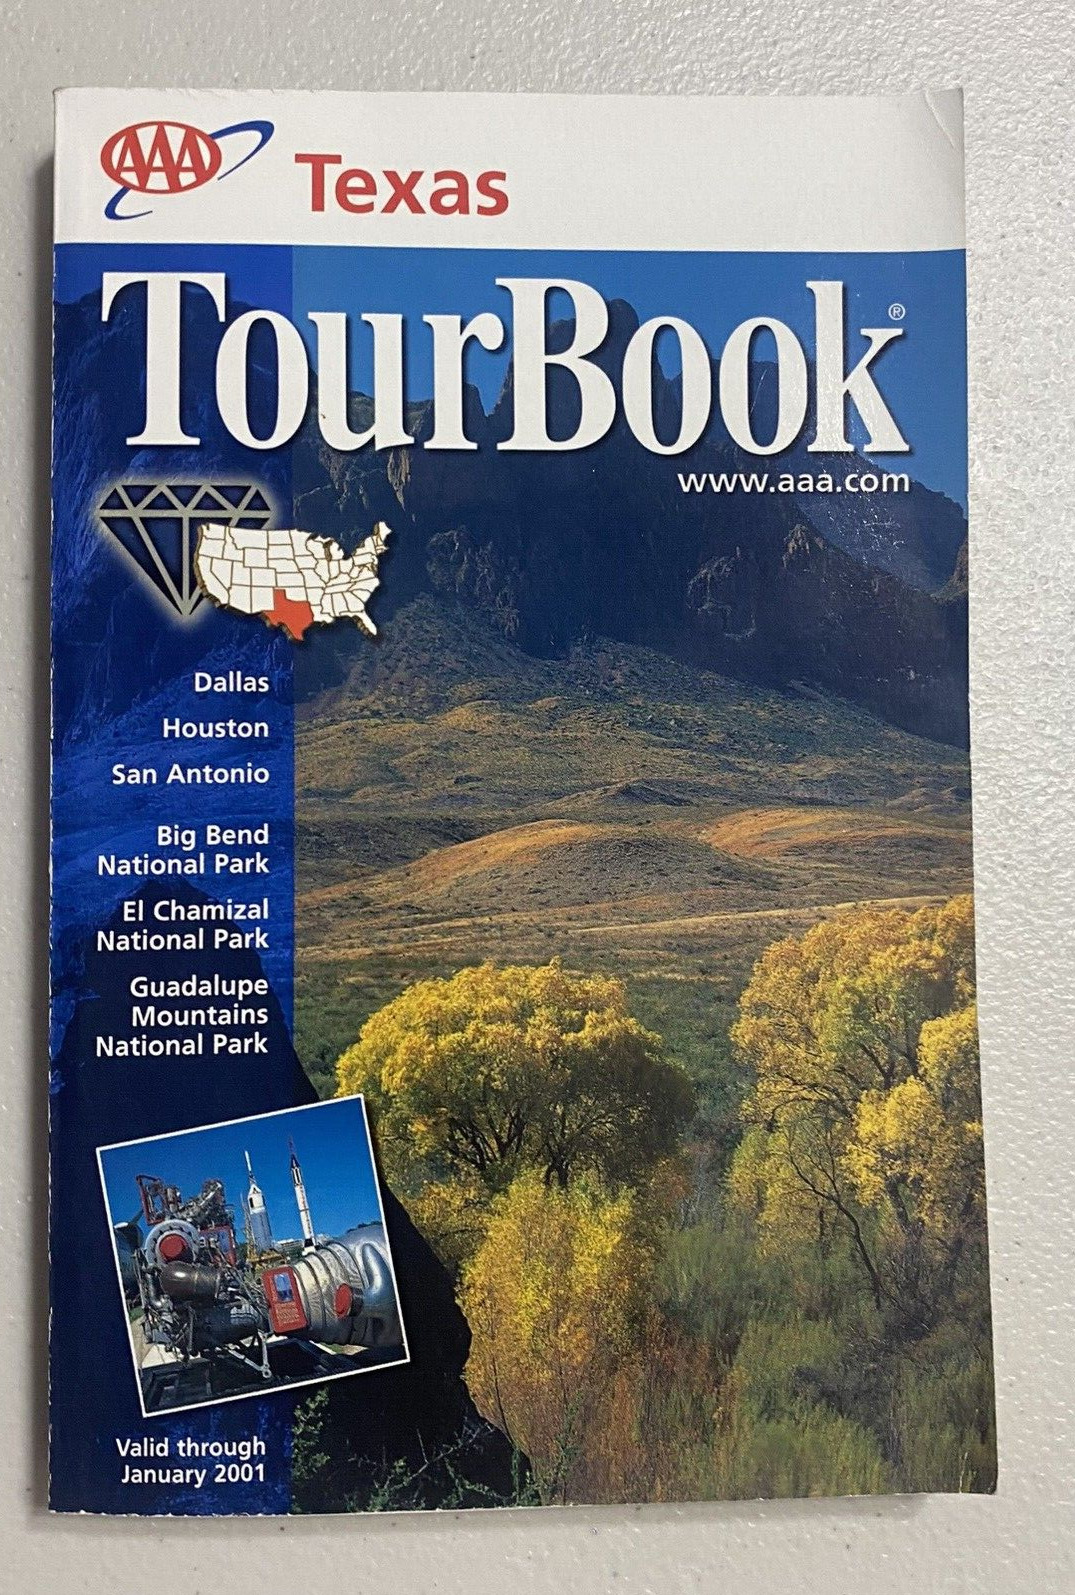 AAA Texas Tour Book 2001 Edition